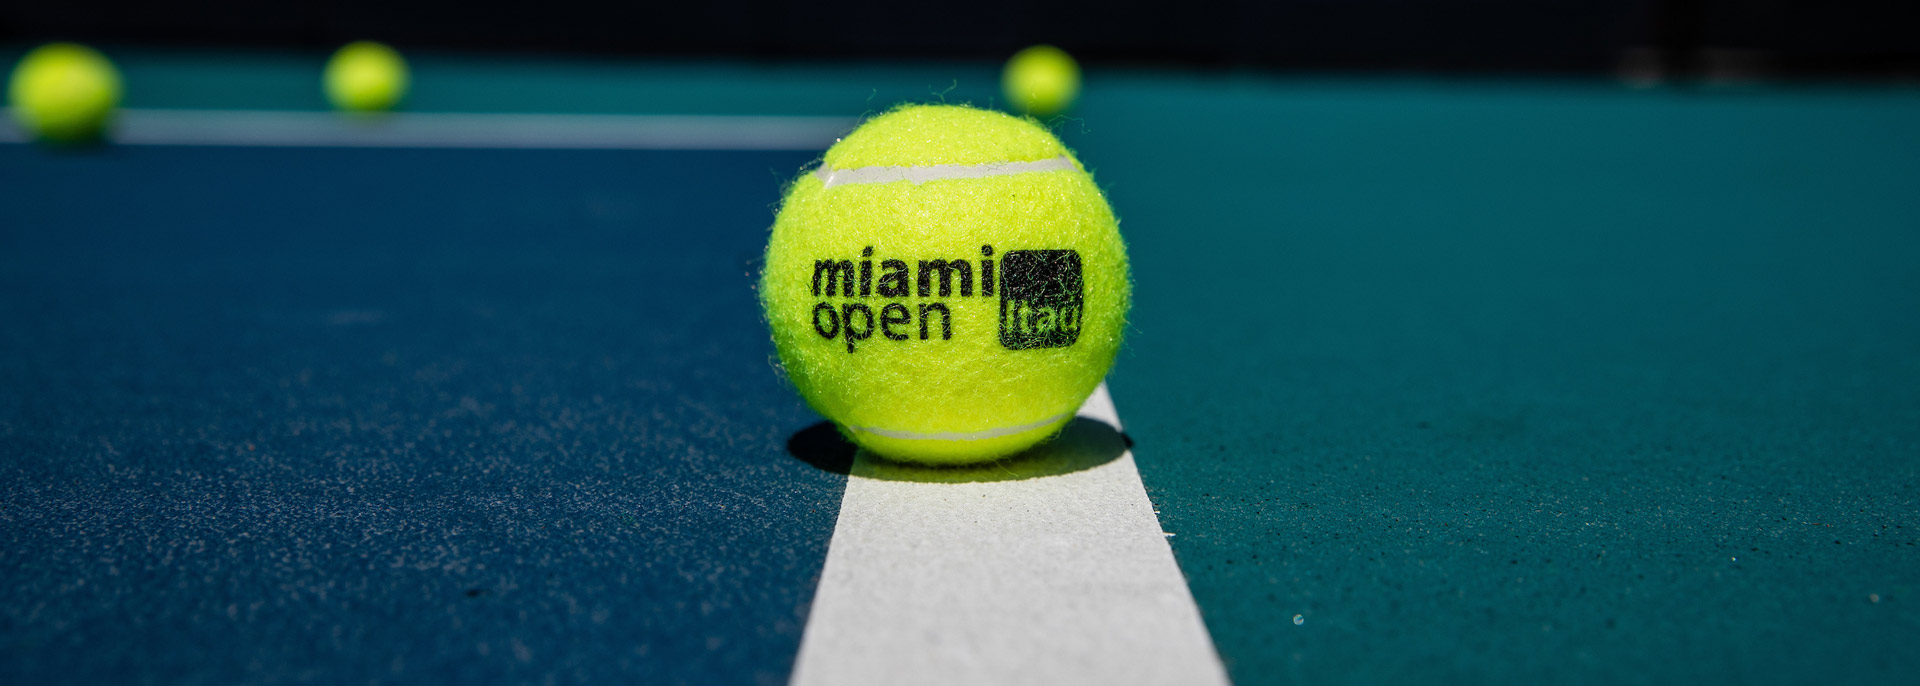 Miami Open Tennis Ball